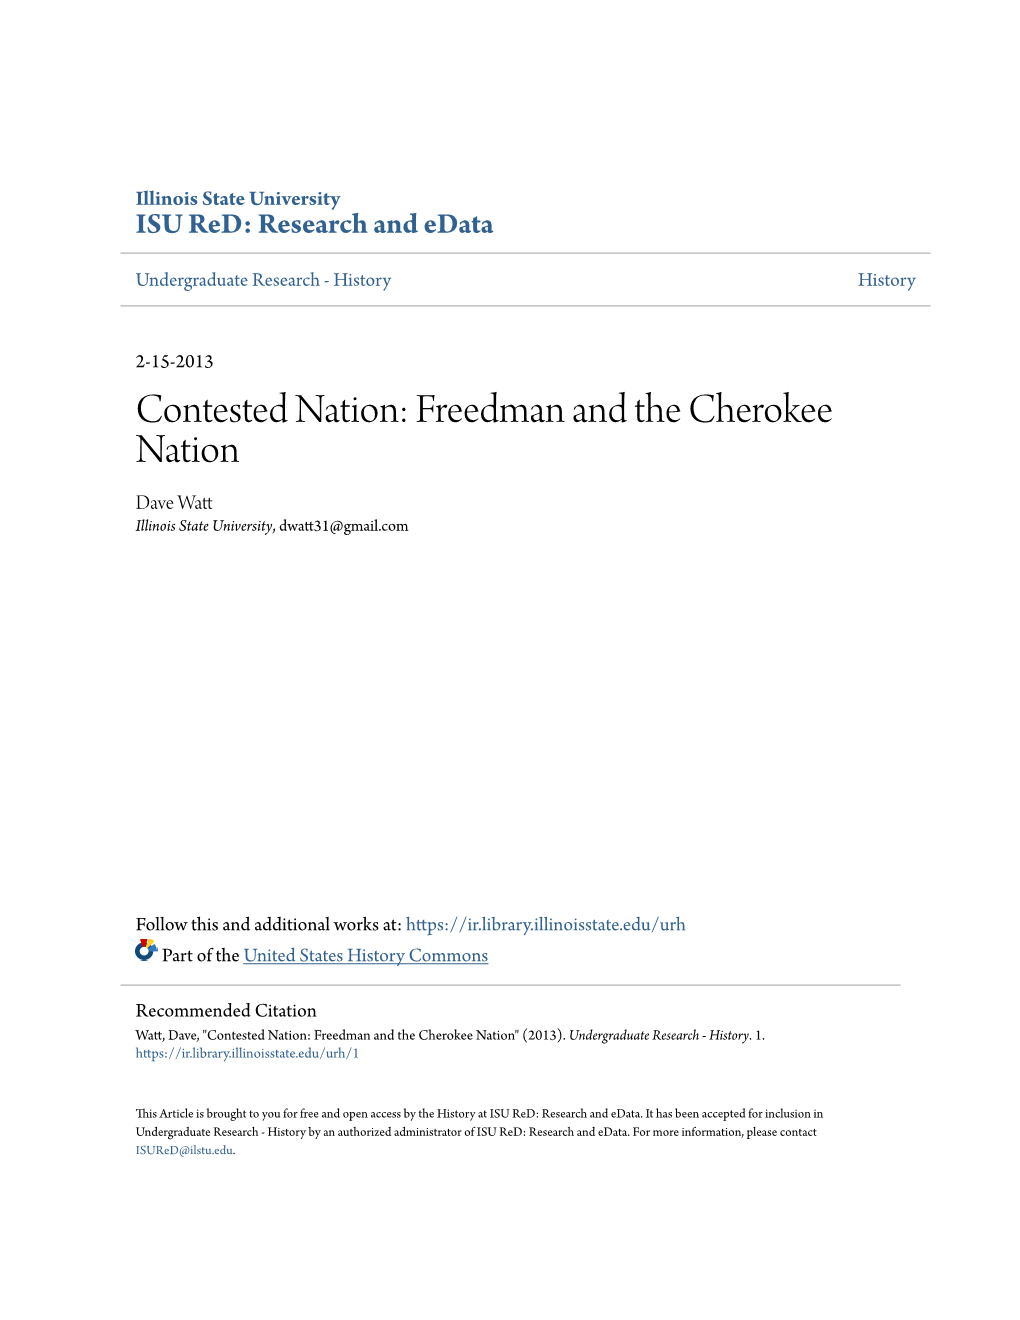 Contested Nation: Freedman and the Cherokee Nation Dave Watt Illinois State University, Dwatt31@Gmail.Com